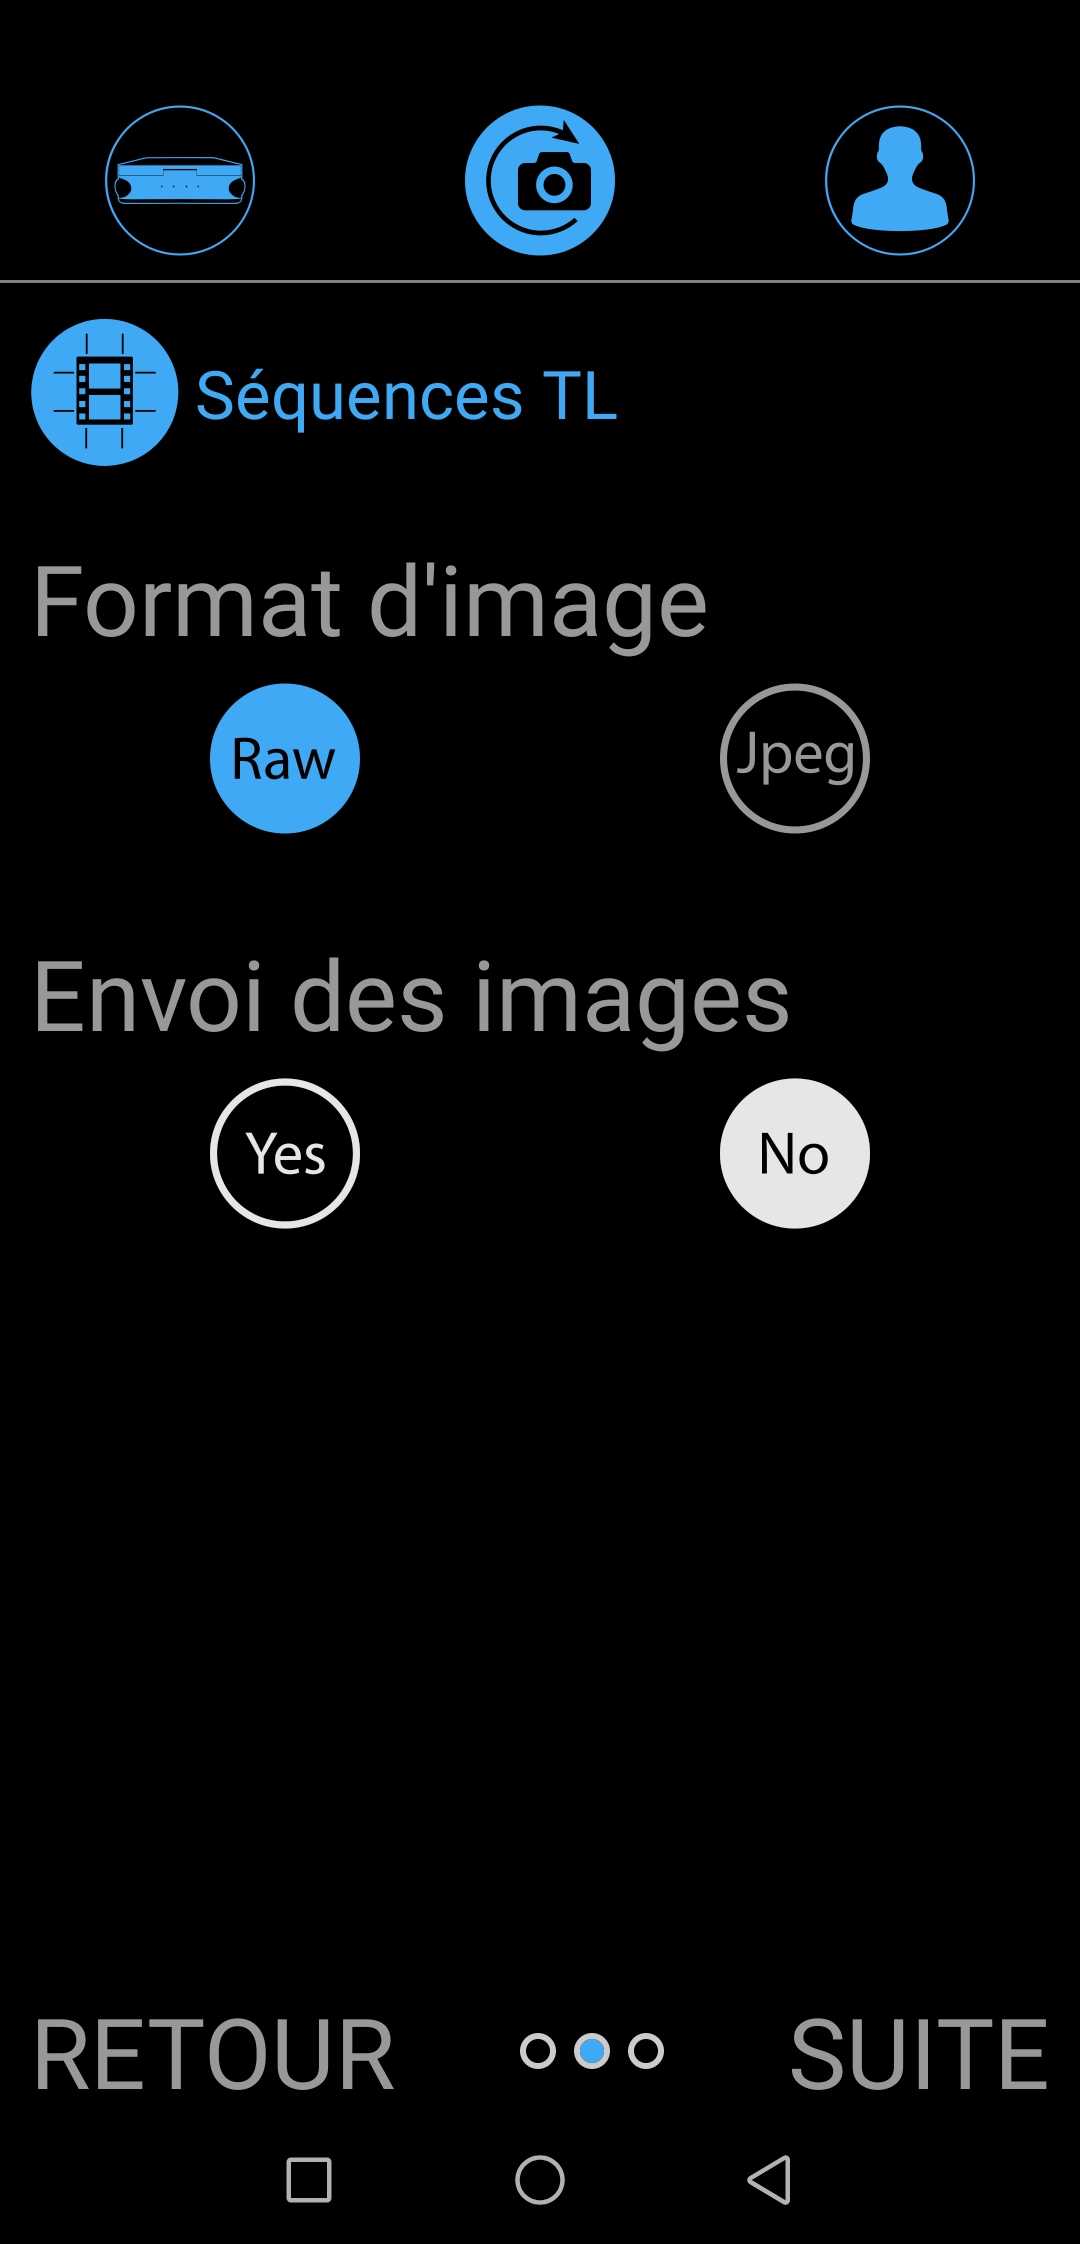 RAW format Tikee remote